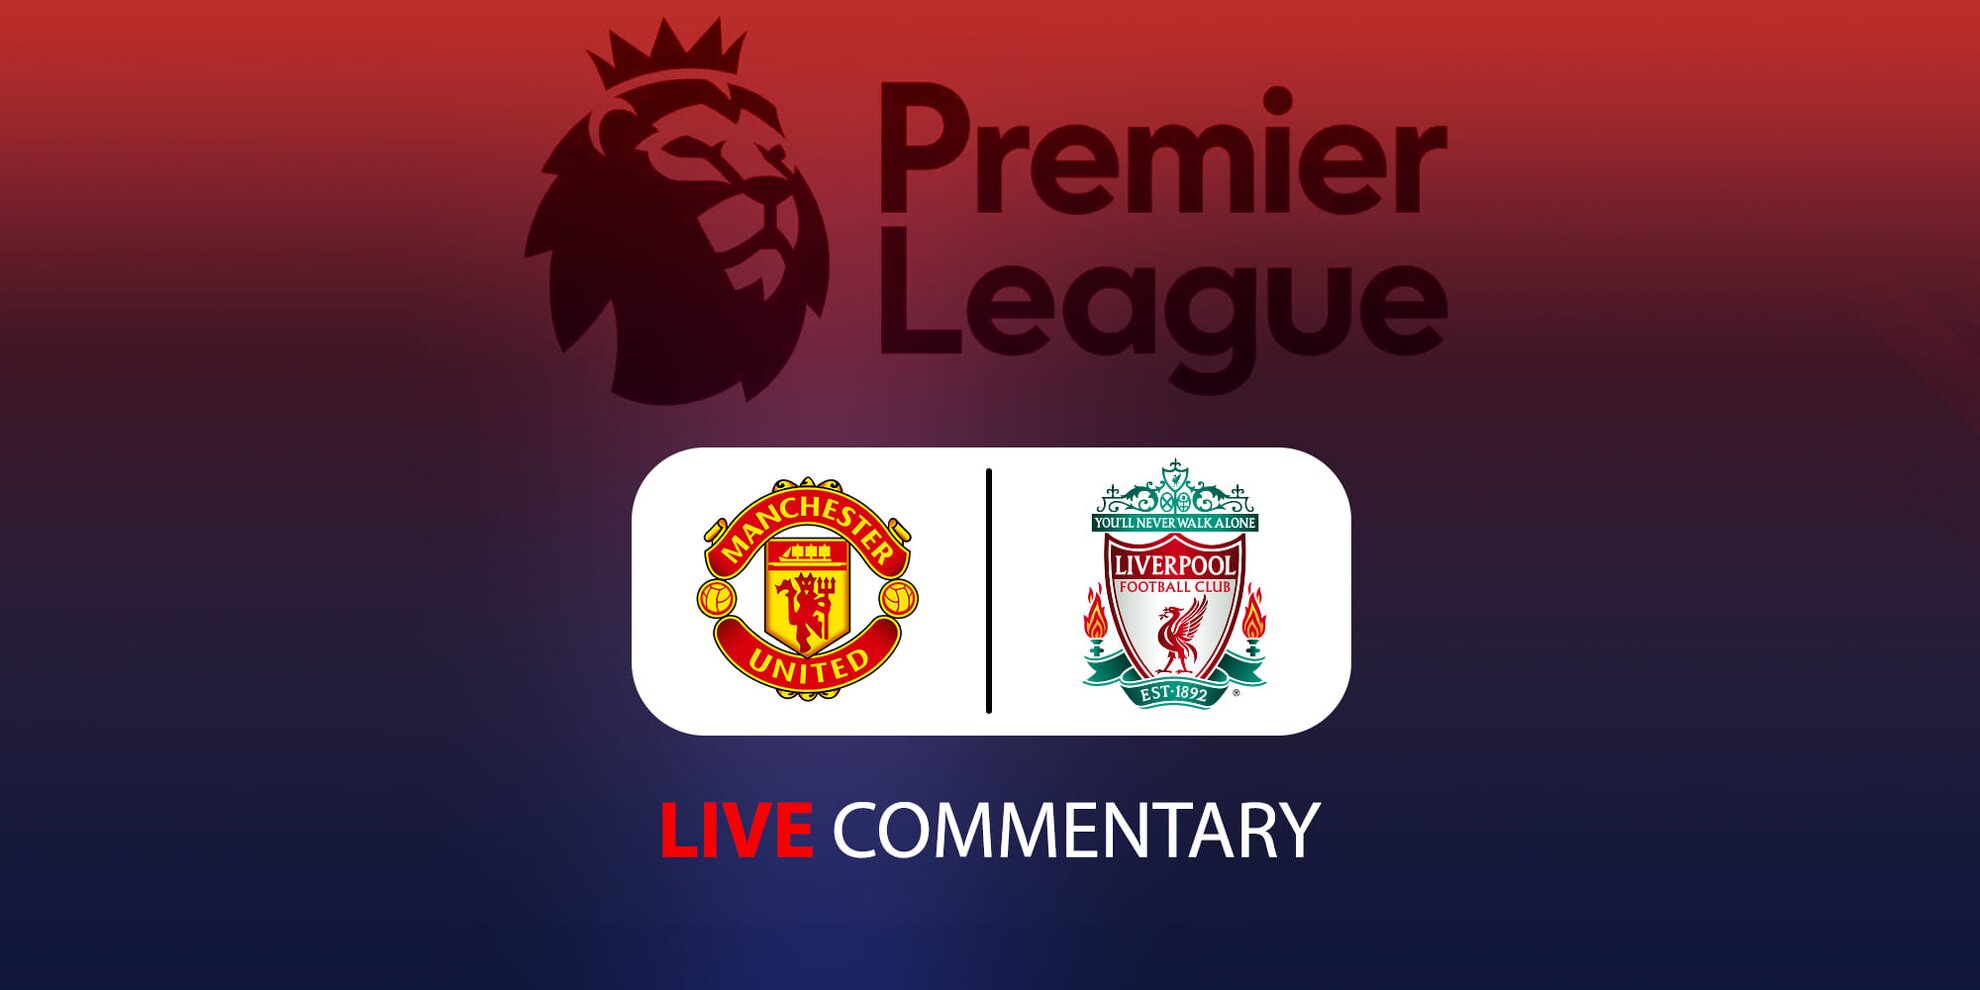 Premier League: Manchester United vs Liverpool Live Commentary